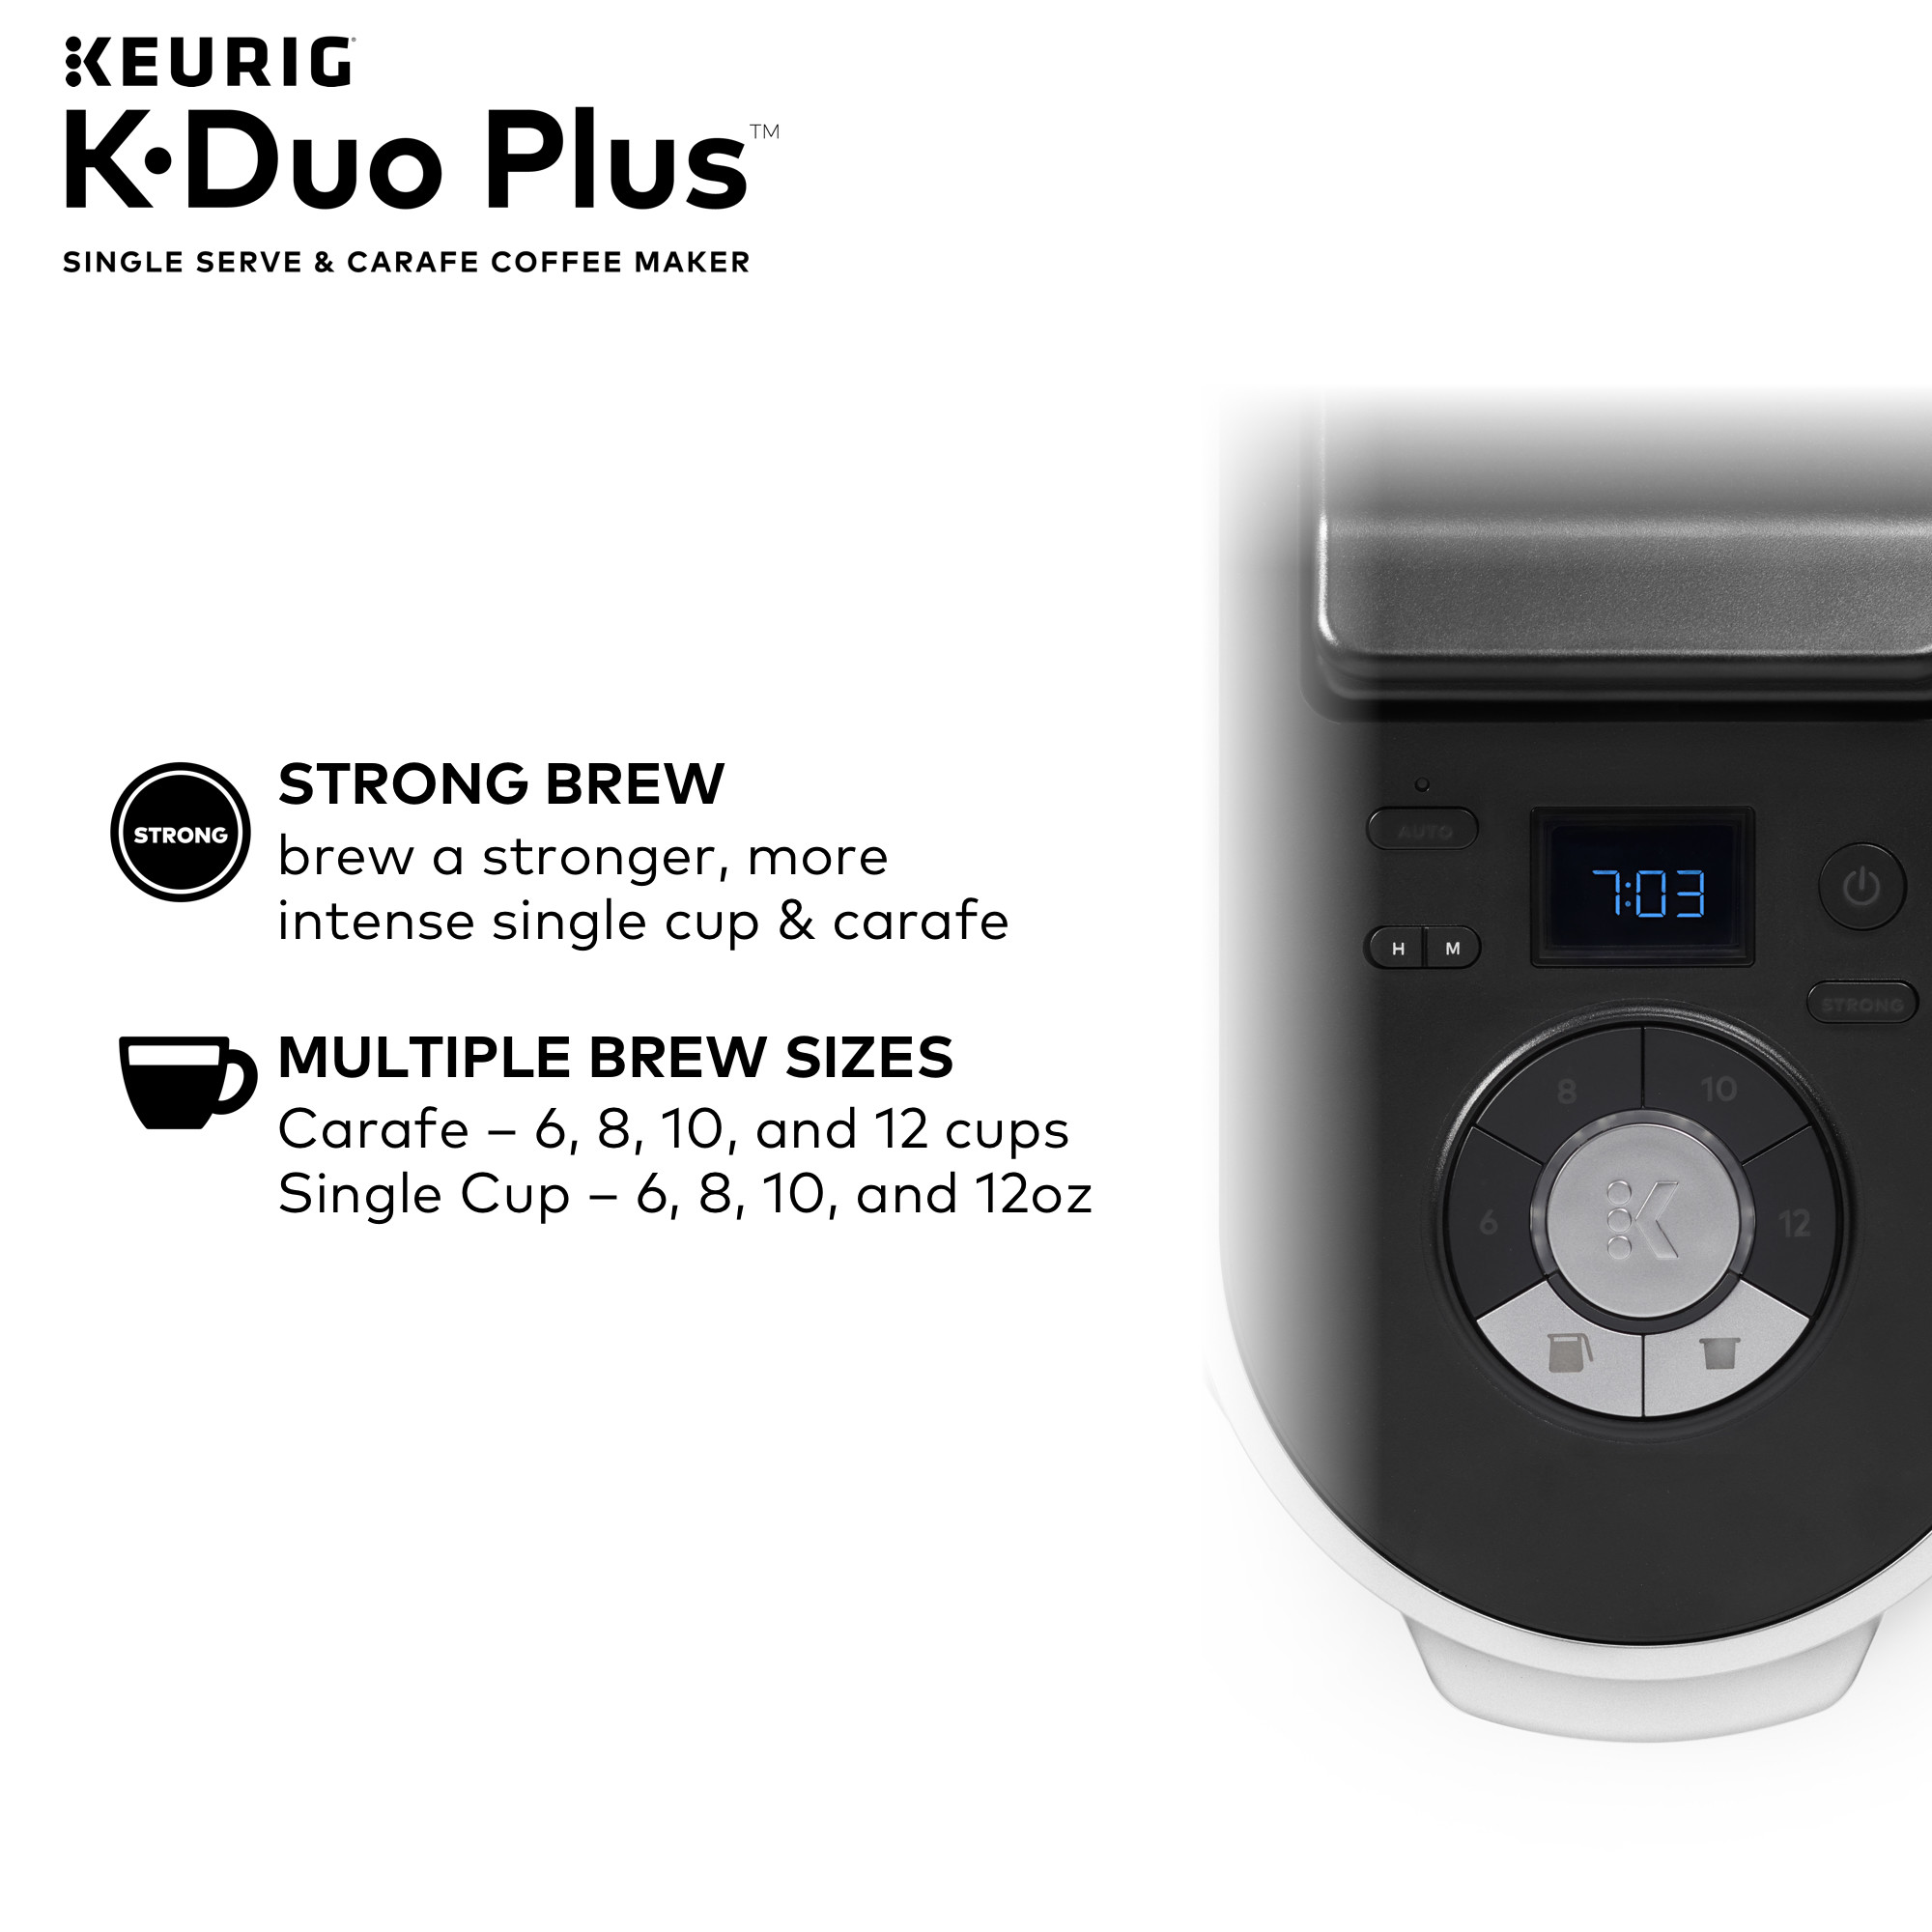 Keurig K-Duo Plus Single Serve & Carafe Coffee Maker - image 19 of 24